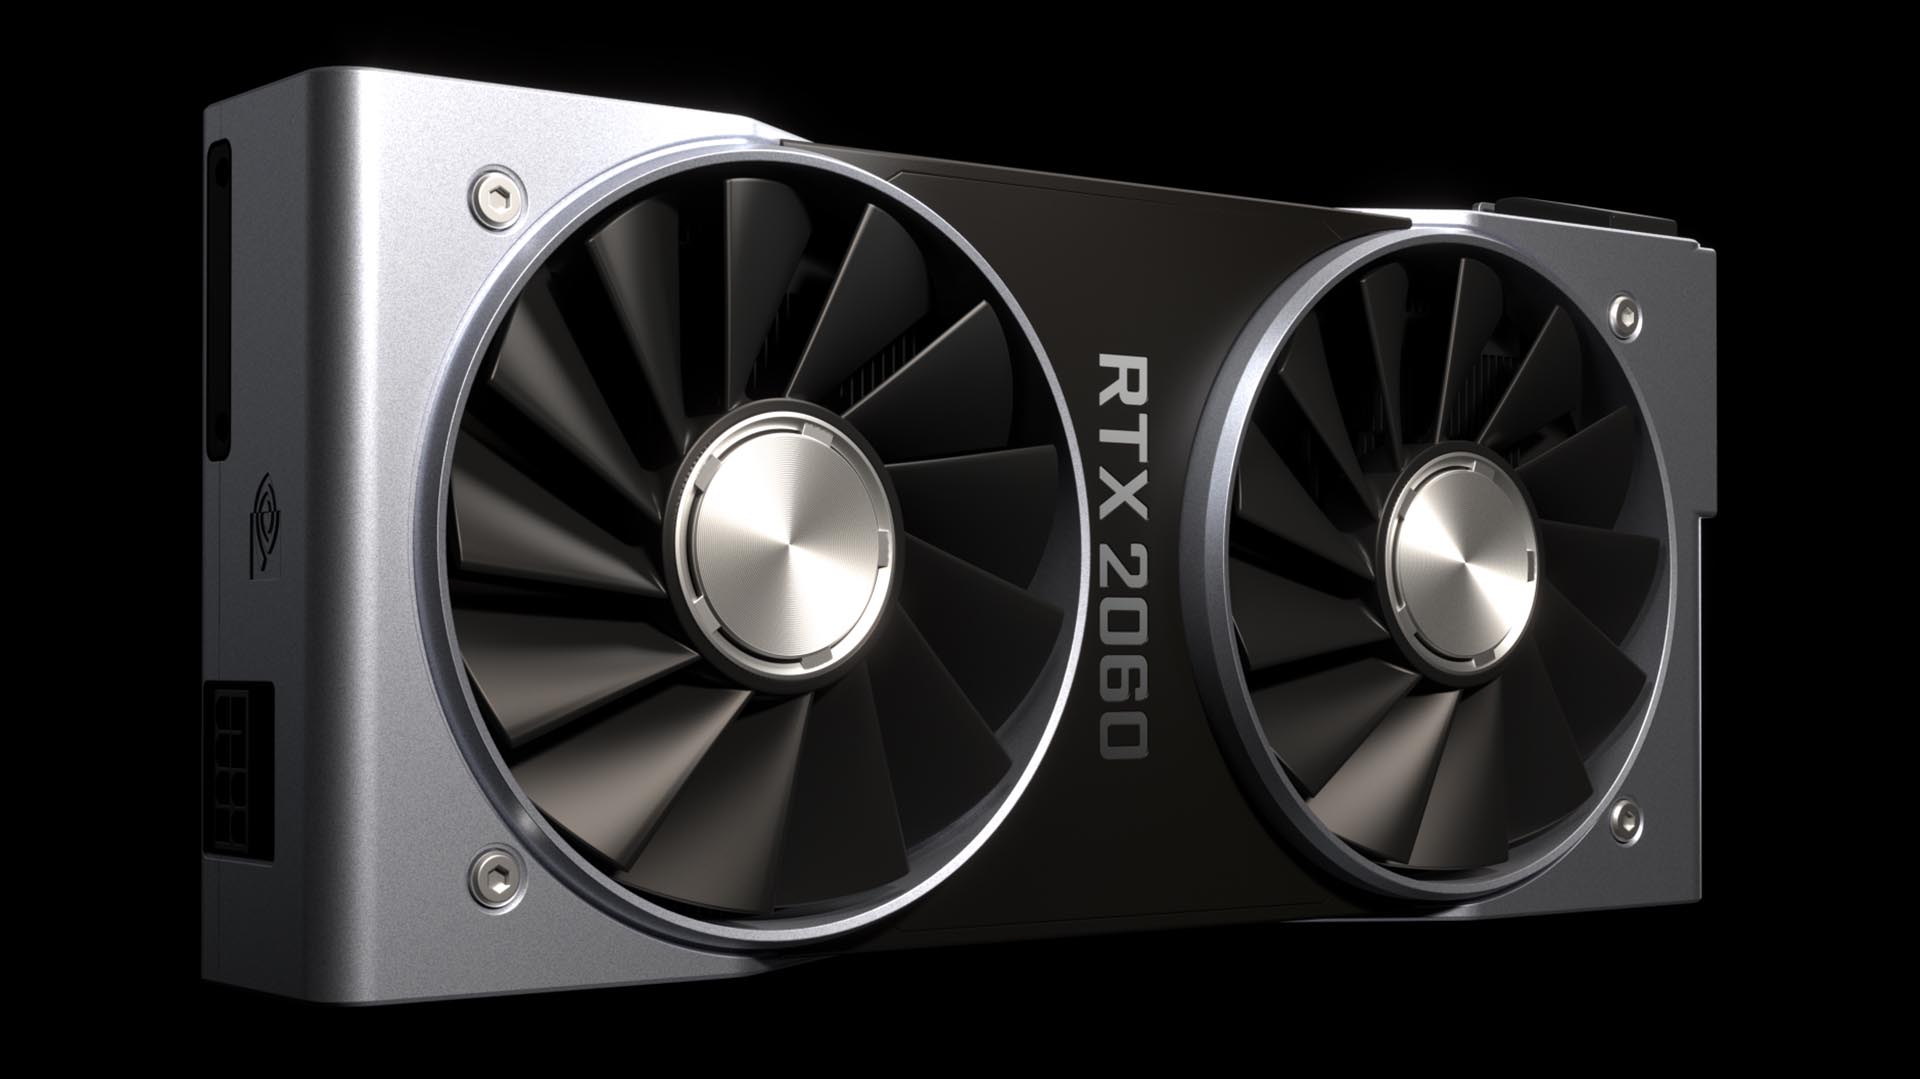 Pictures of Nvidia's Canceled RTX 3090 Super GPU Leaked